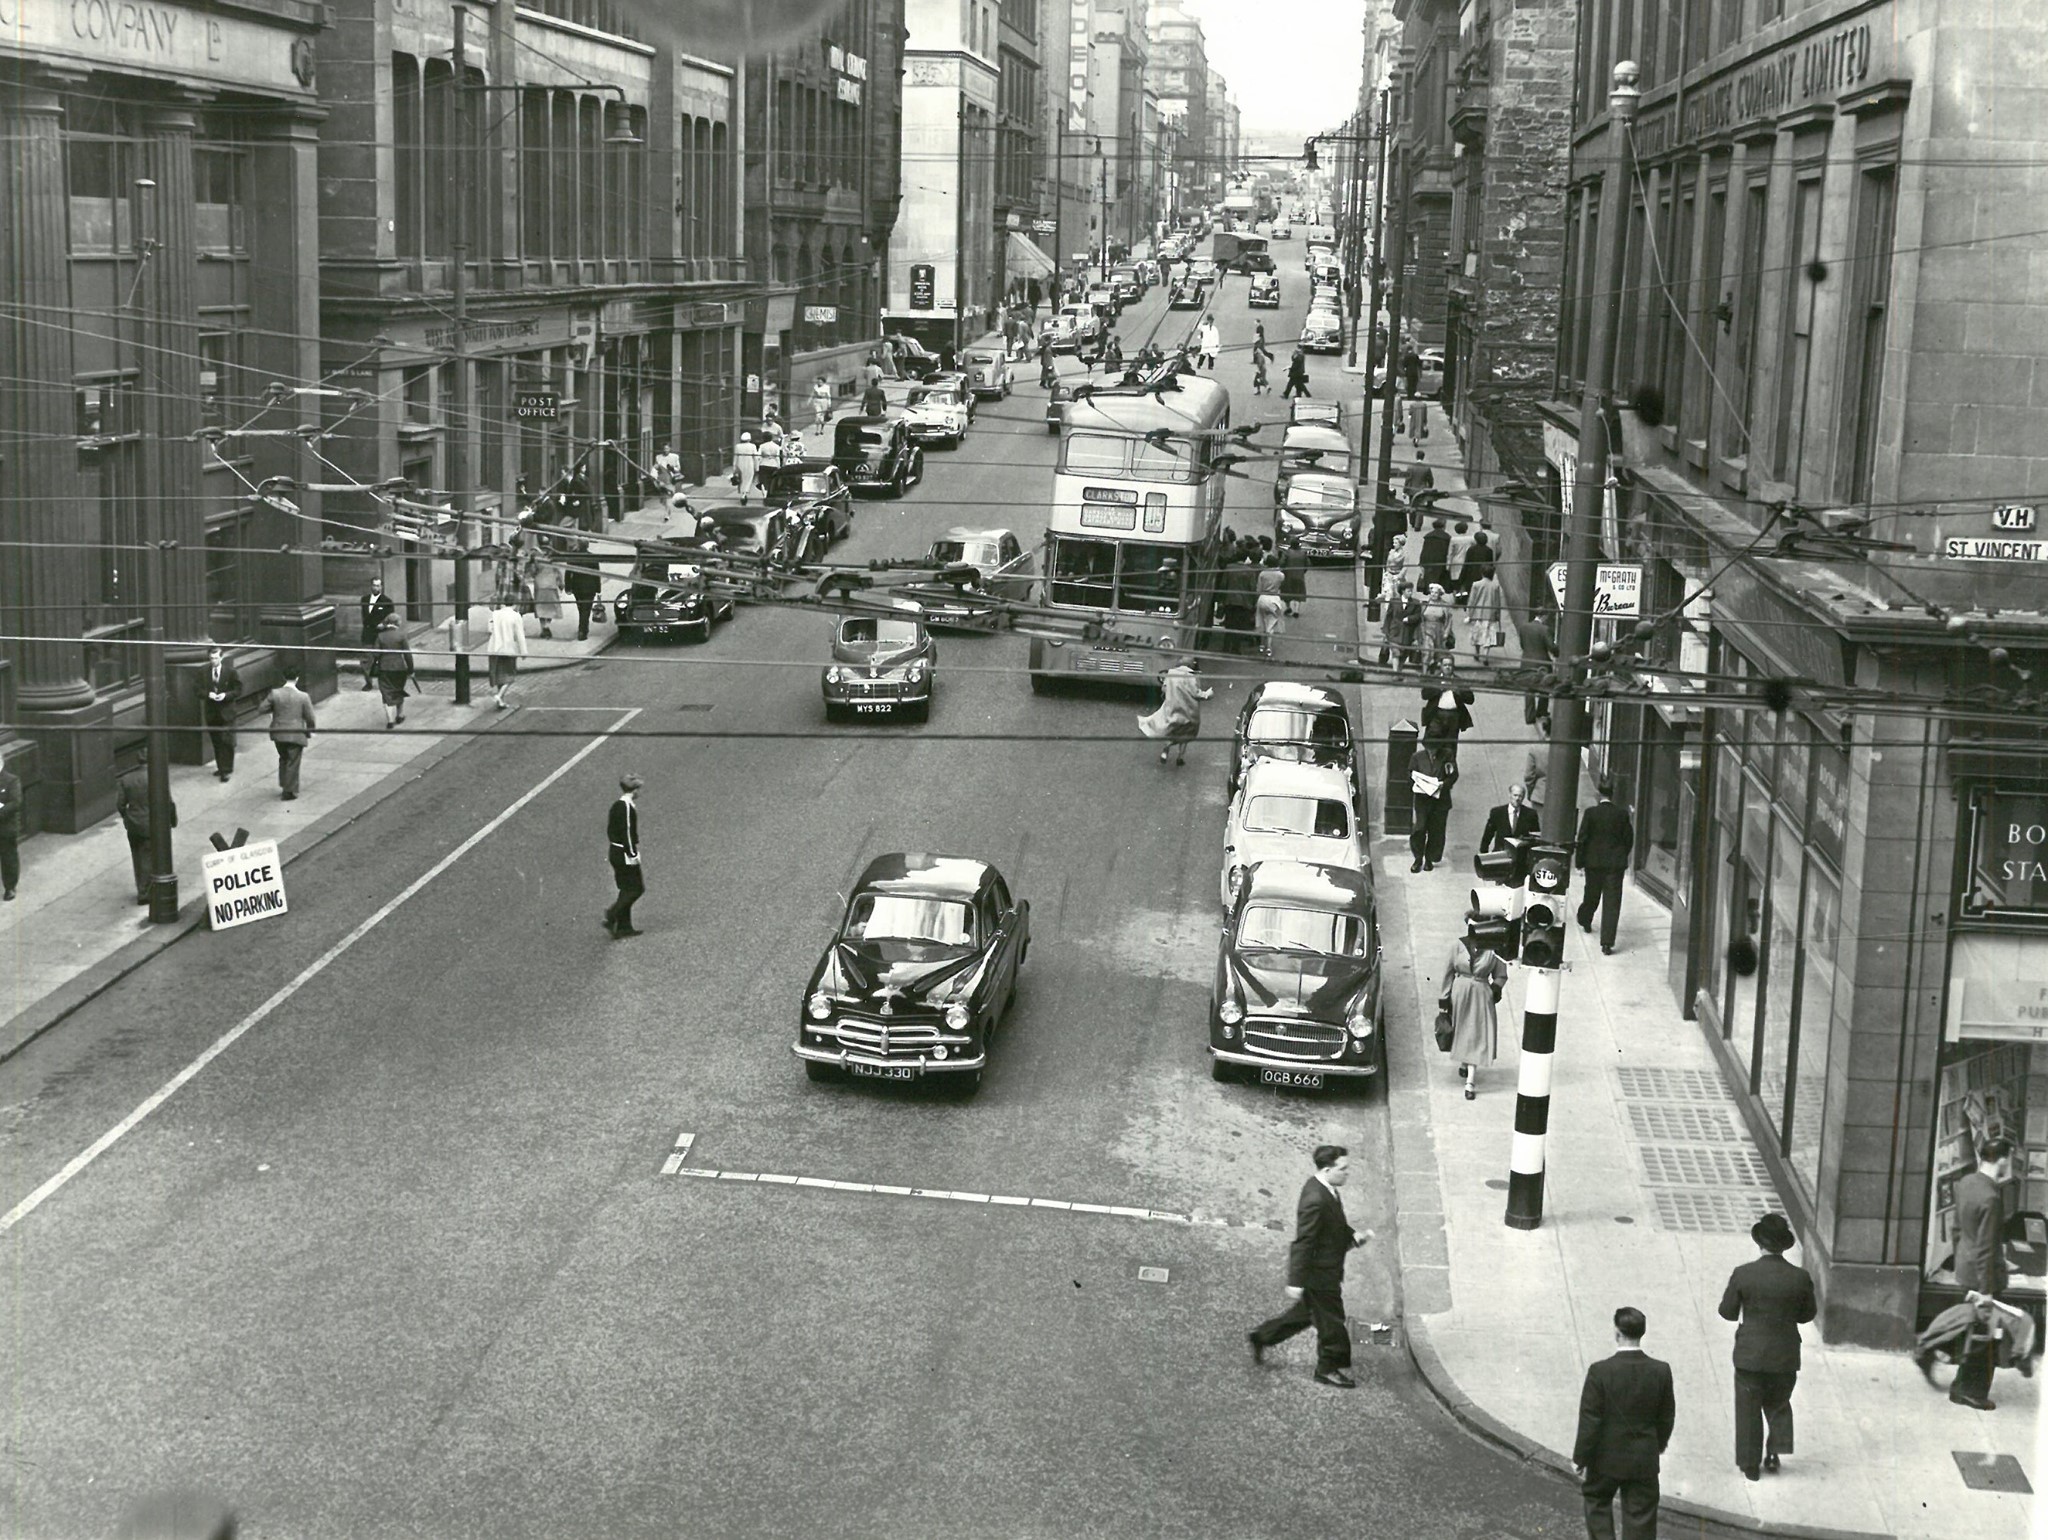 Glasgow: Then - West Nile Street in 1950s